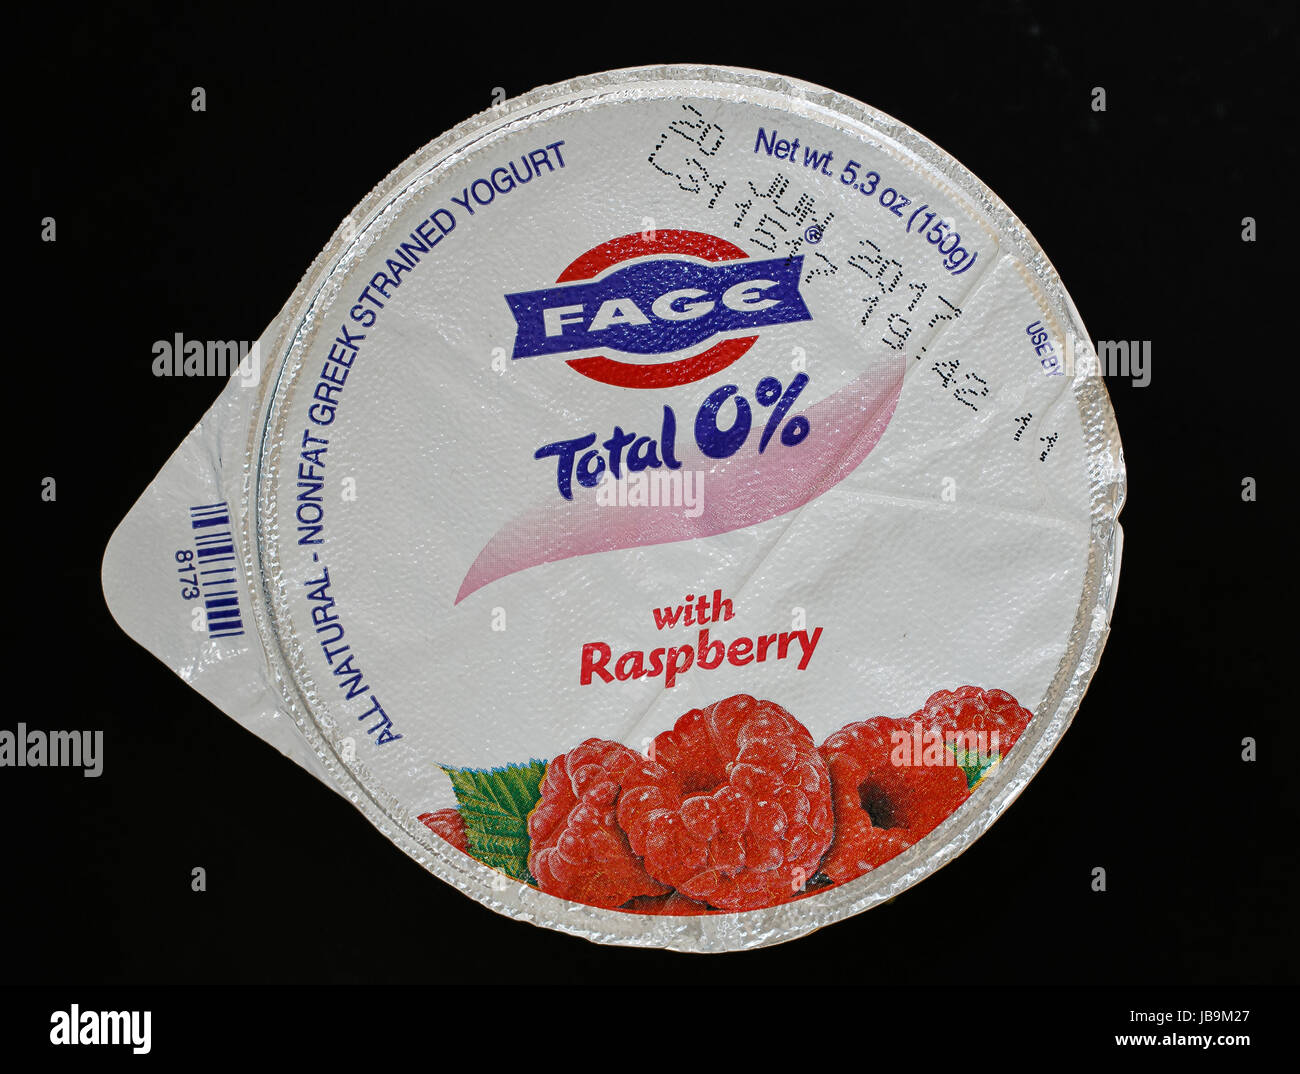 Fage yogurt with raspberry flavor. Stock Photo